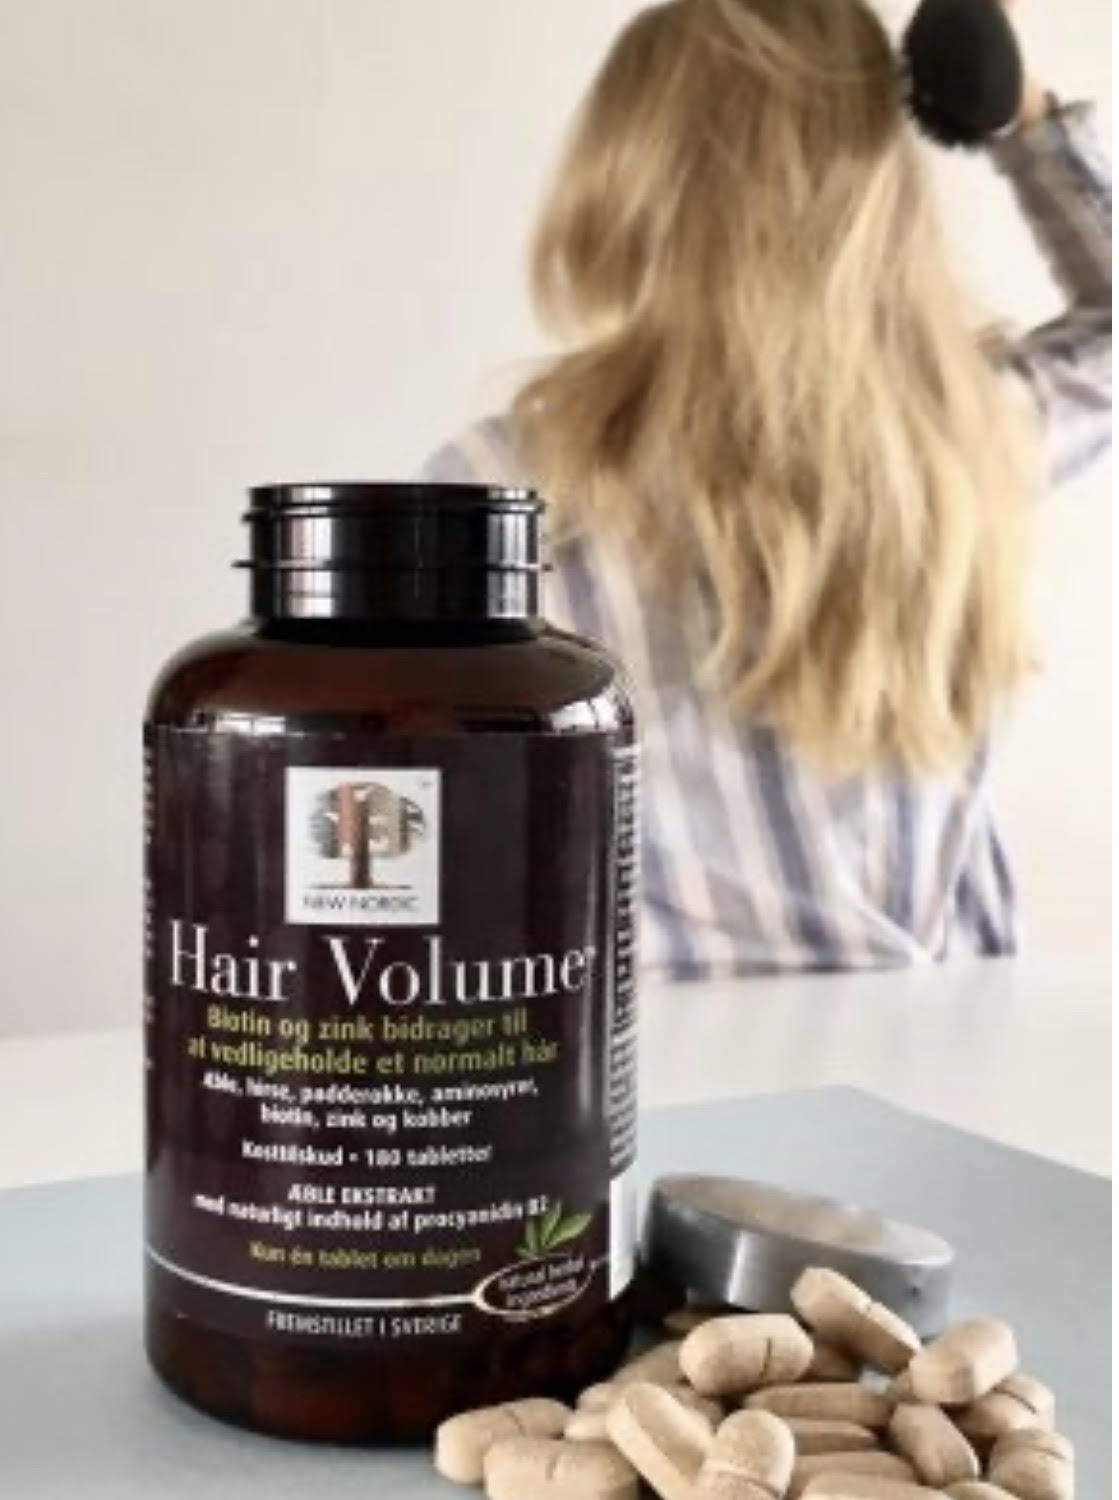 Hair Volume, kosttilskud, hår, vitaminer, hårvækst, New Nordic